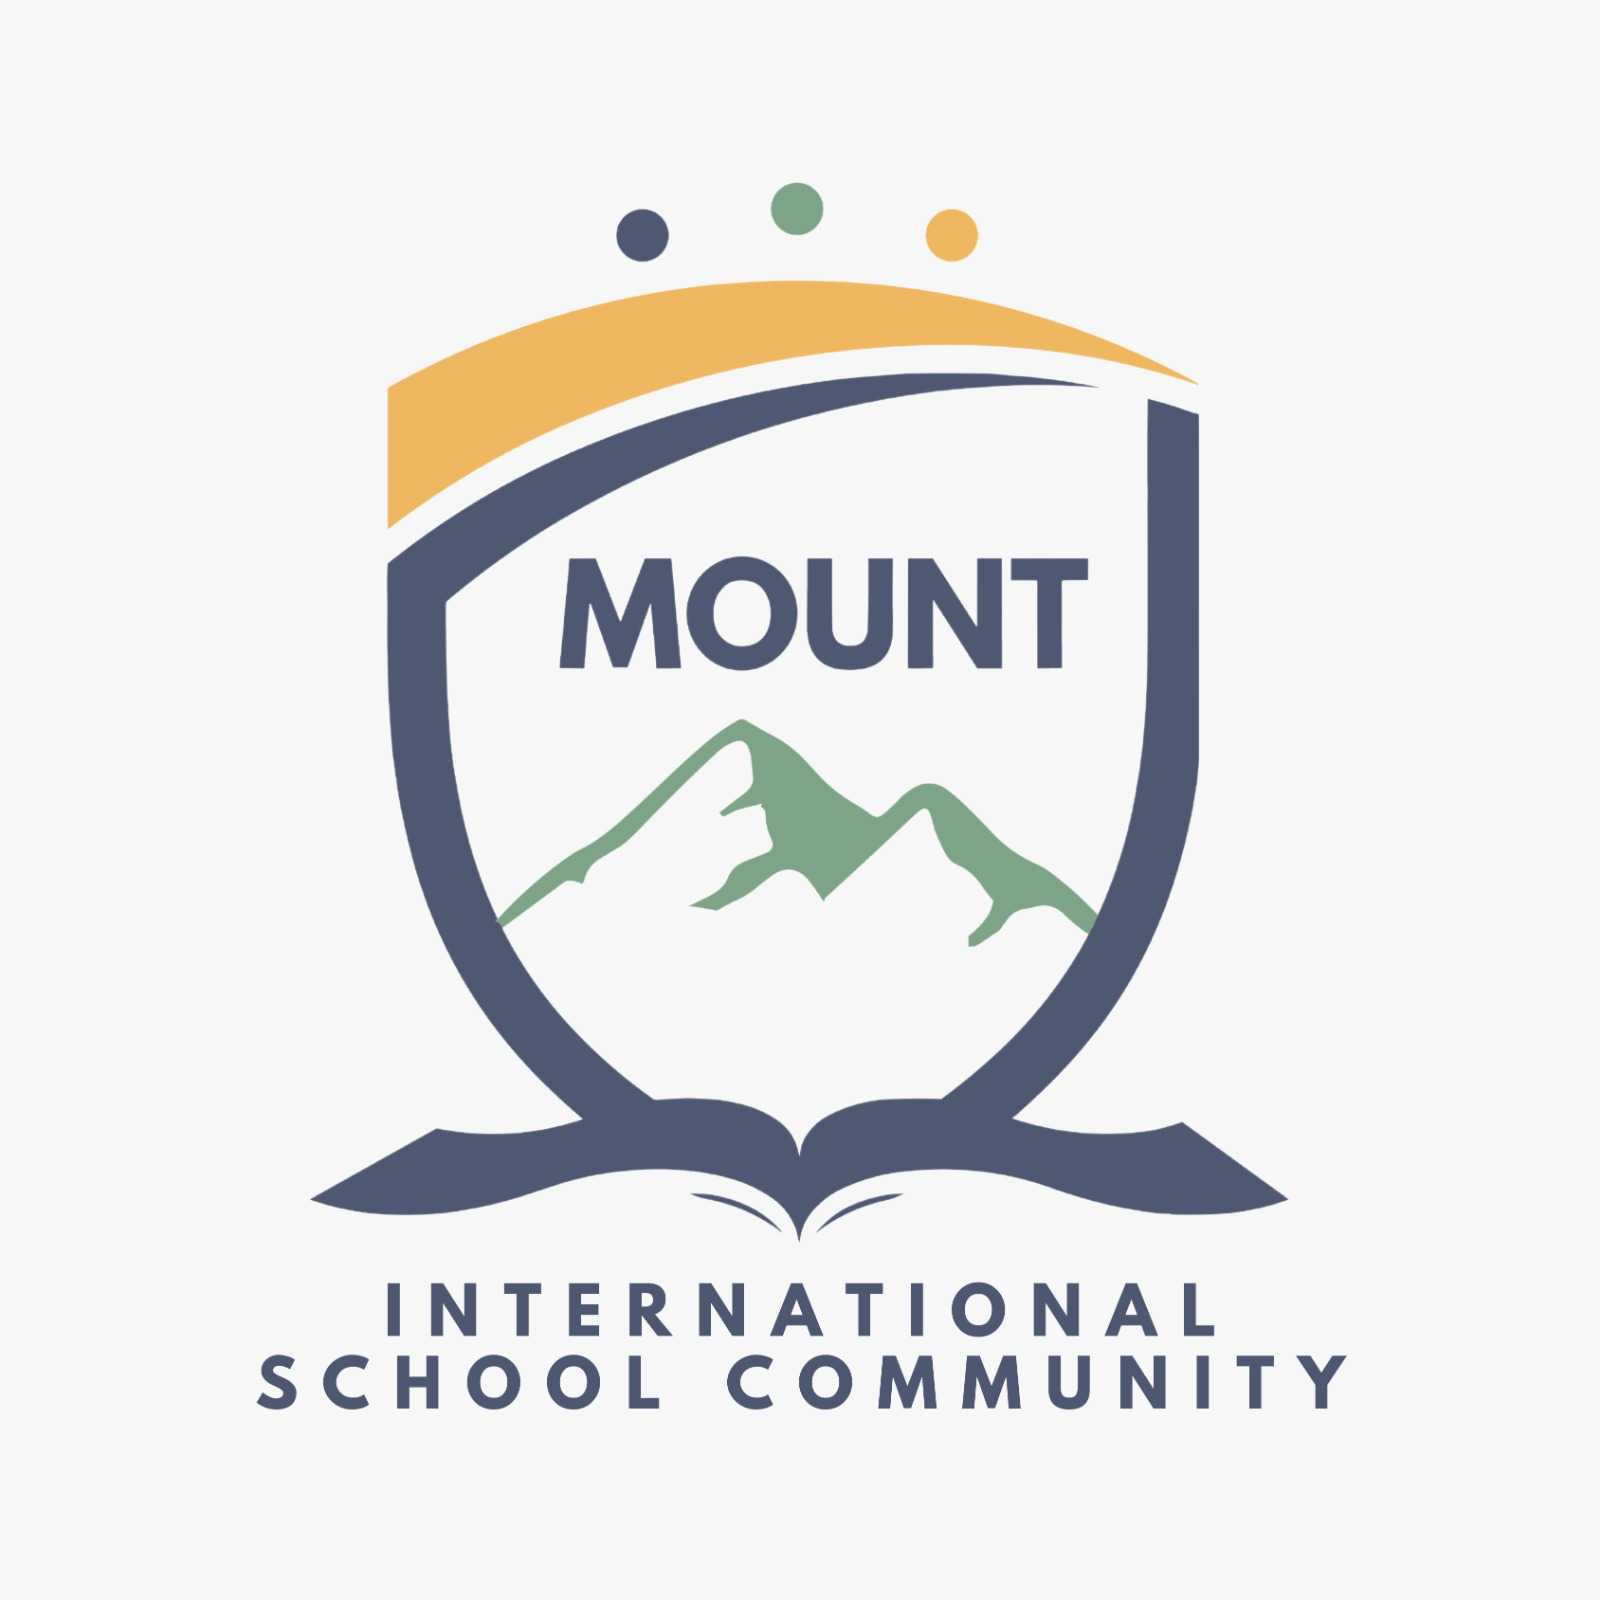 Mount International School Community - MISC